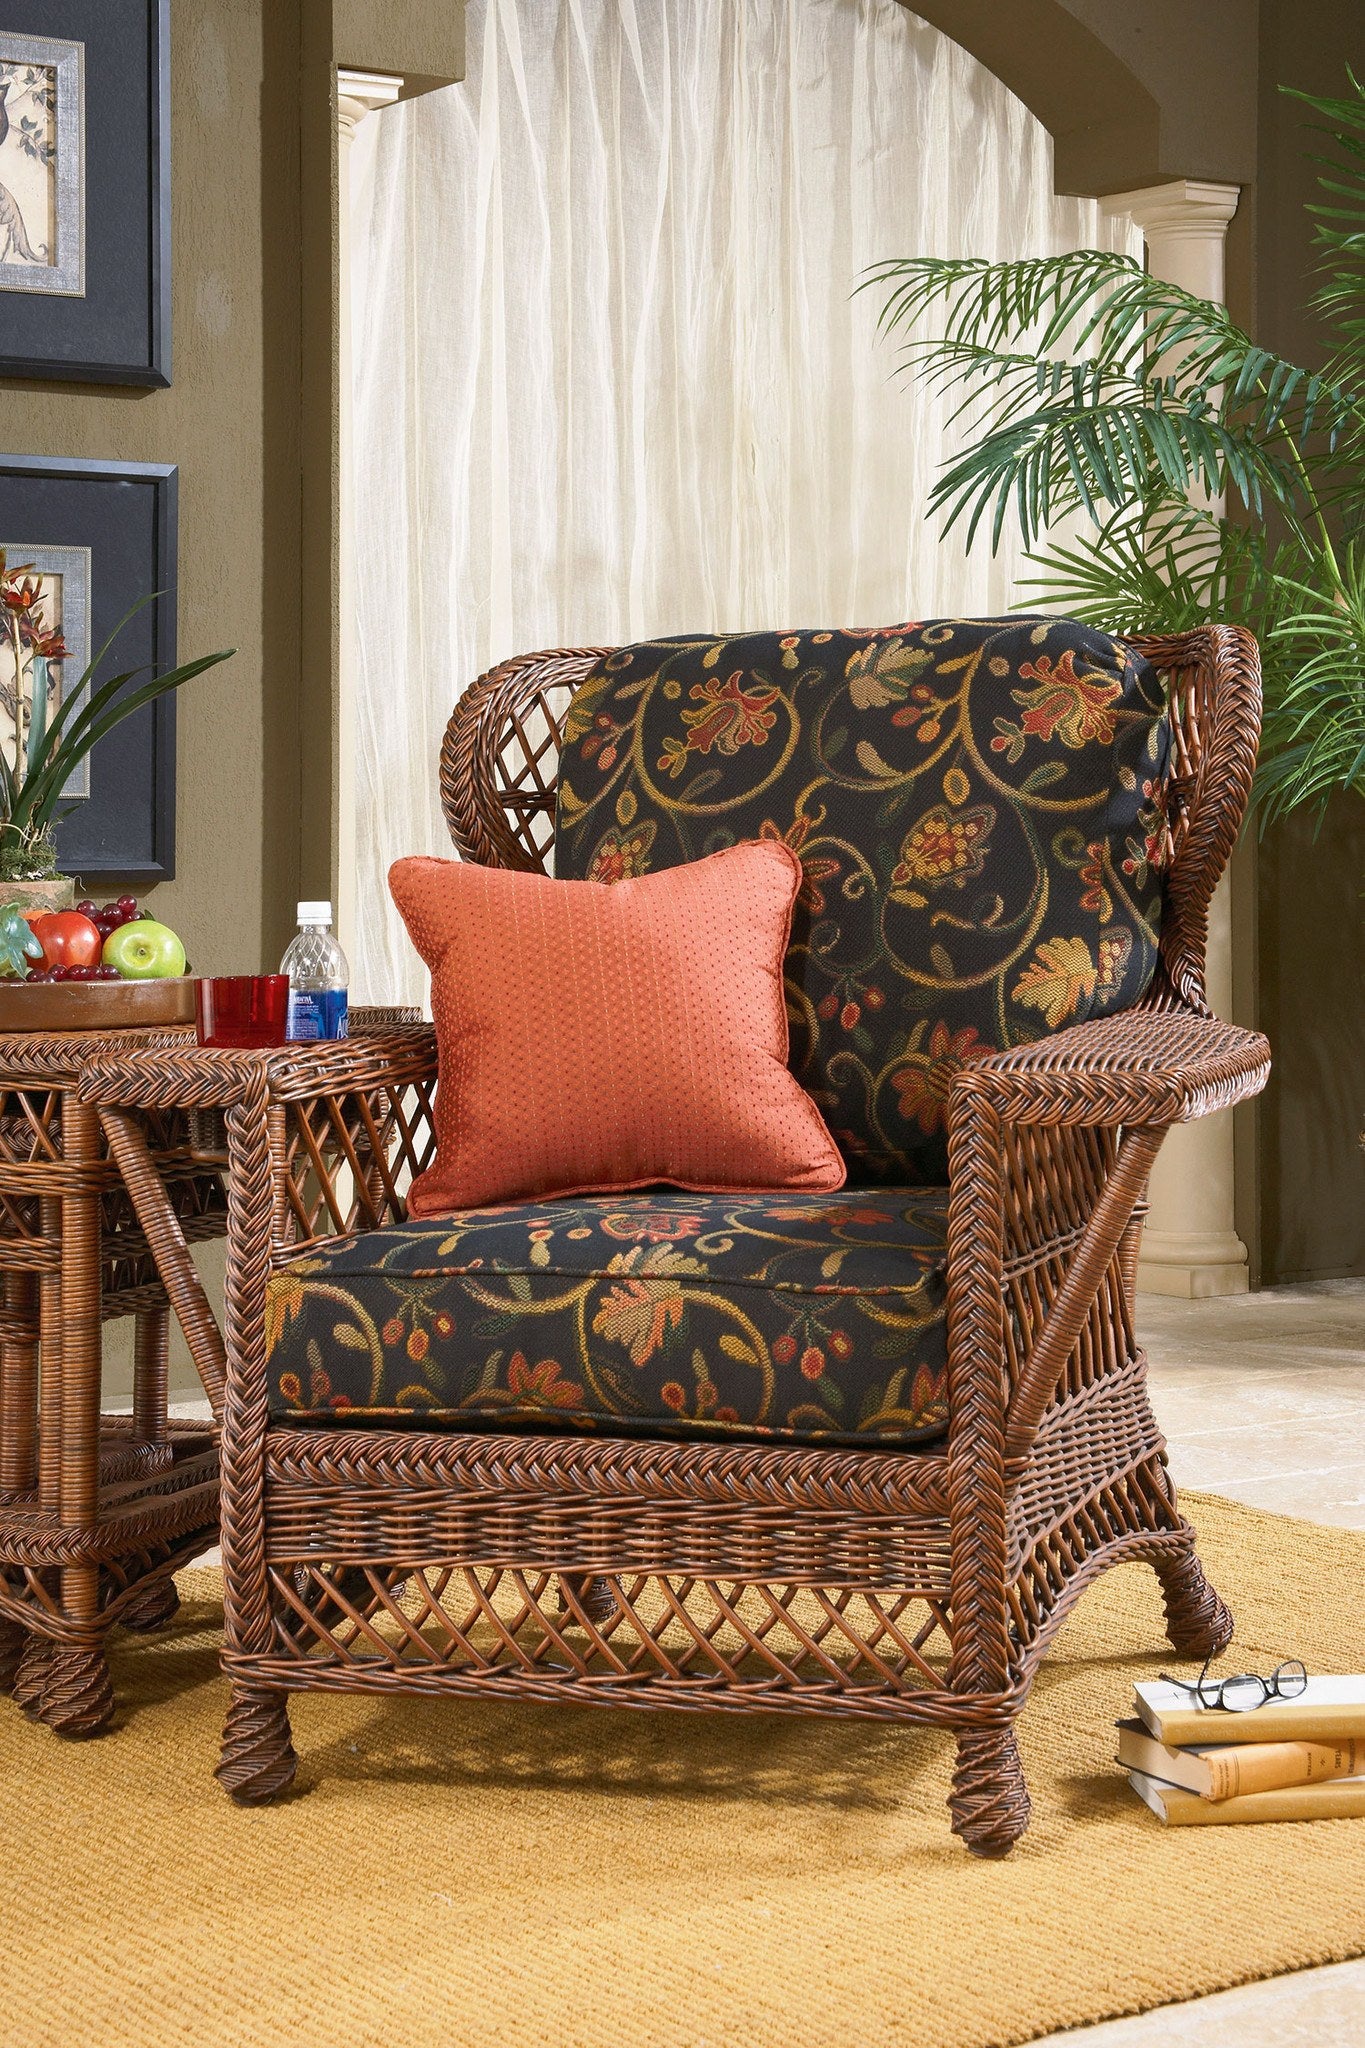 Designer Wicker & Rattan By Tribor Designer Wicker by Tribor Bar Harbor Wing Chair Chair - Rattan Imports